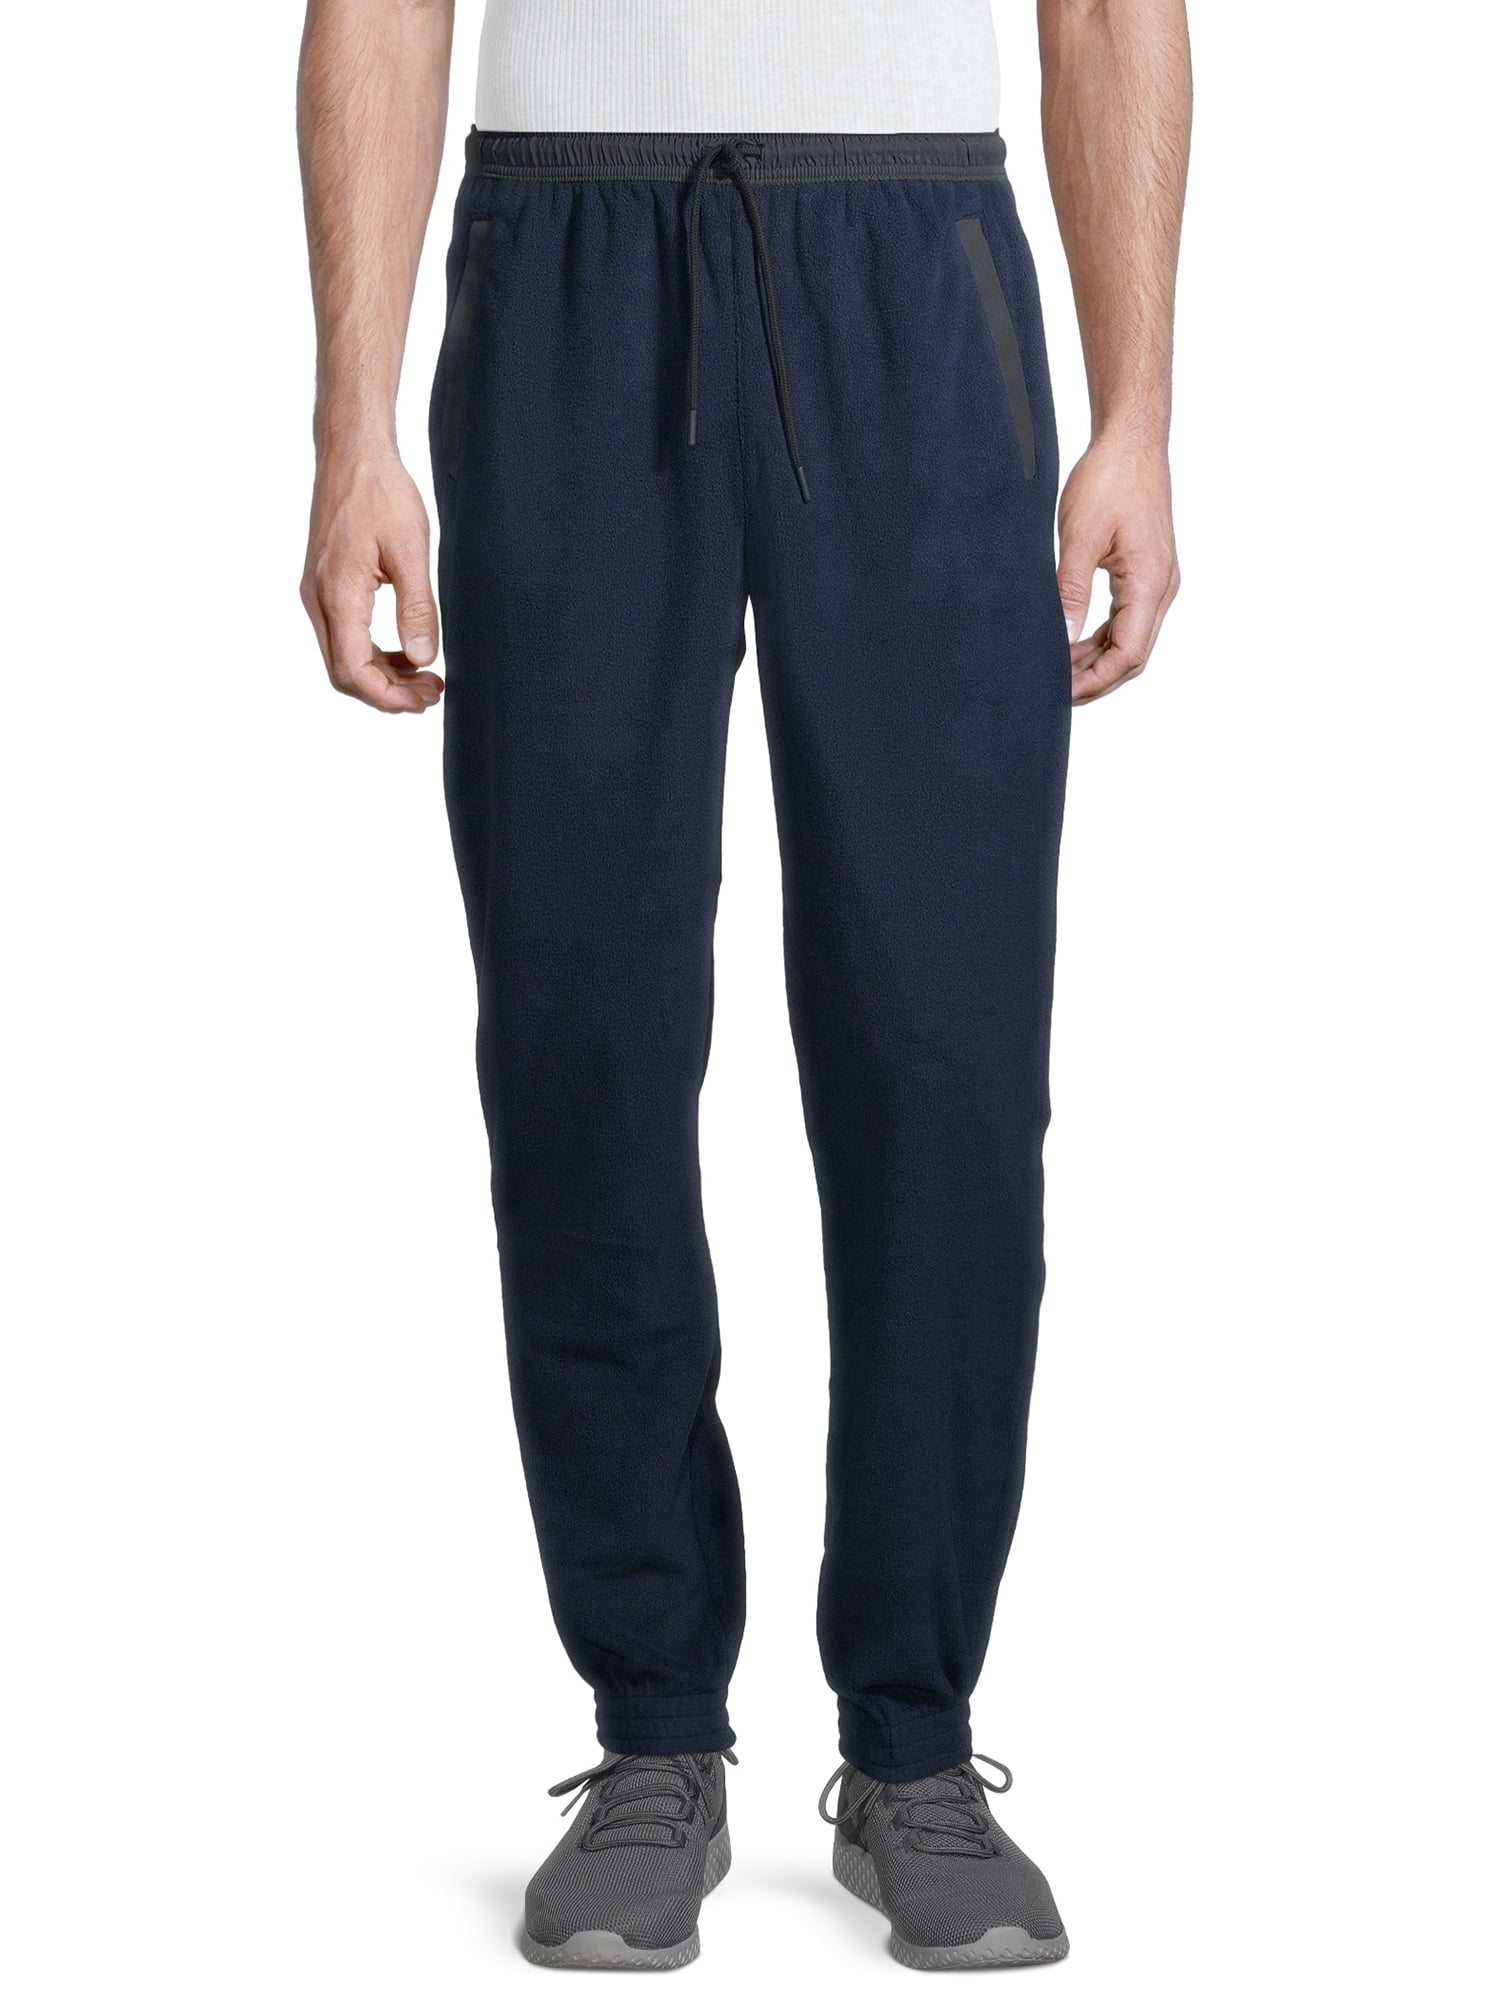 Russell Men's and Big Men's Microfleece Pants, up to Size 3XL - Walmart.com